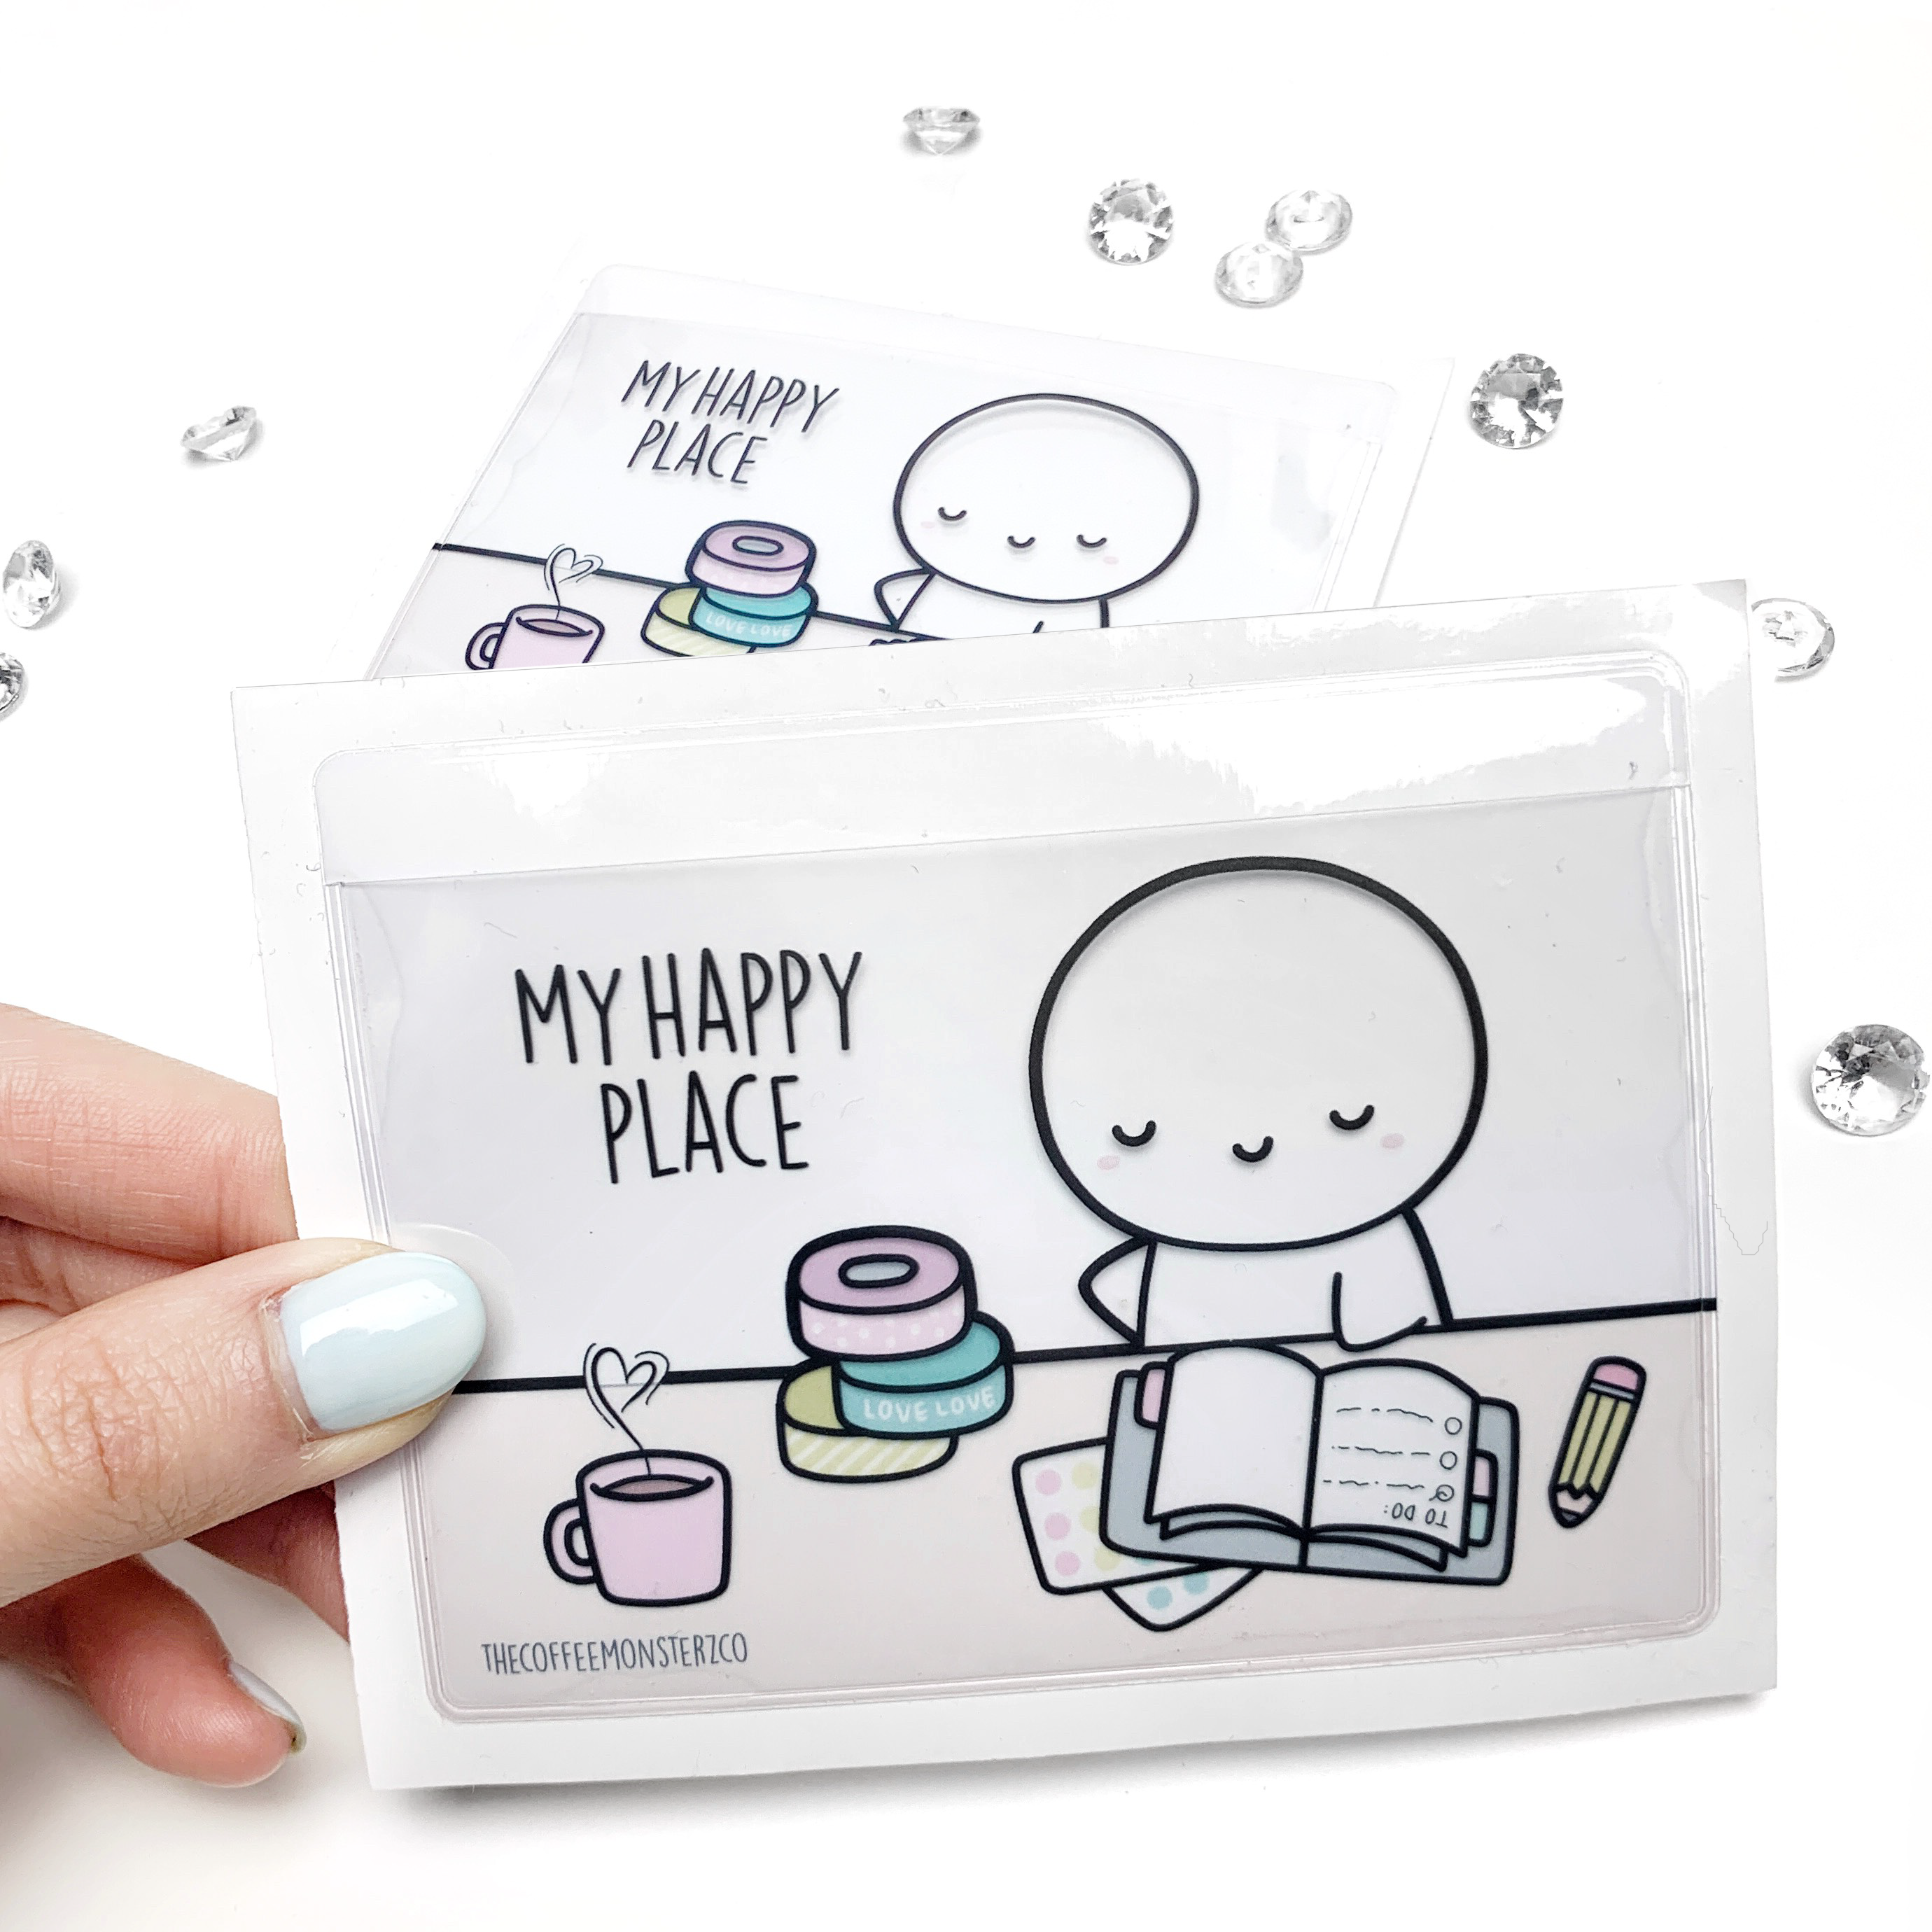 My Happy Place - Adhesive Sticky Pocket